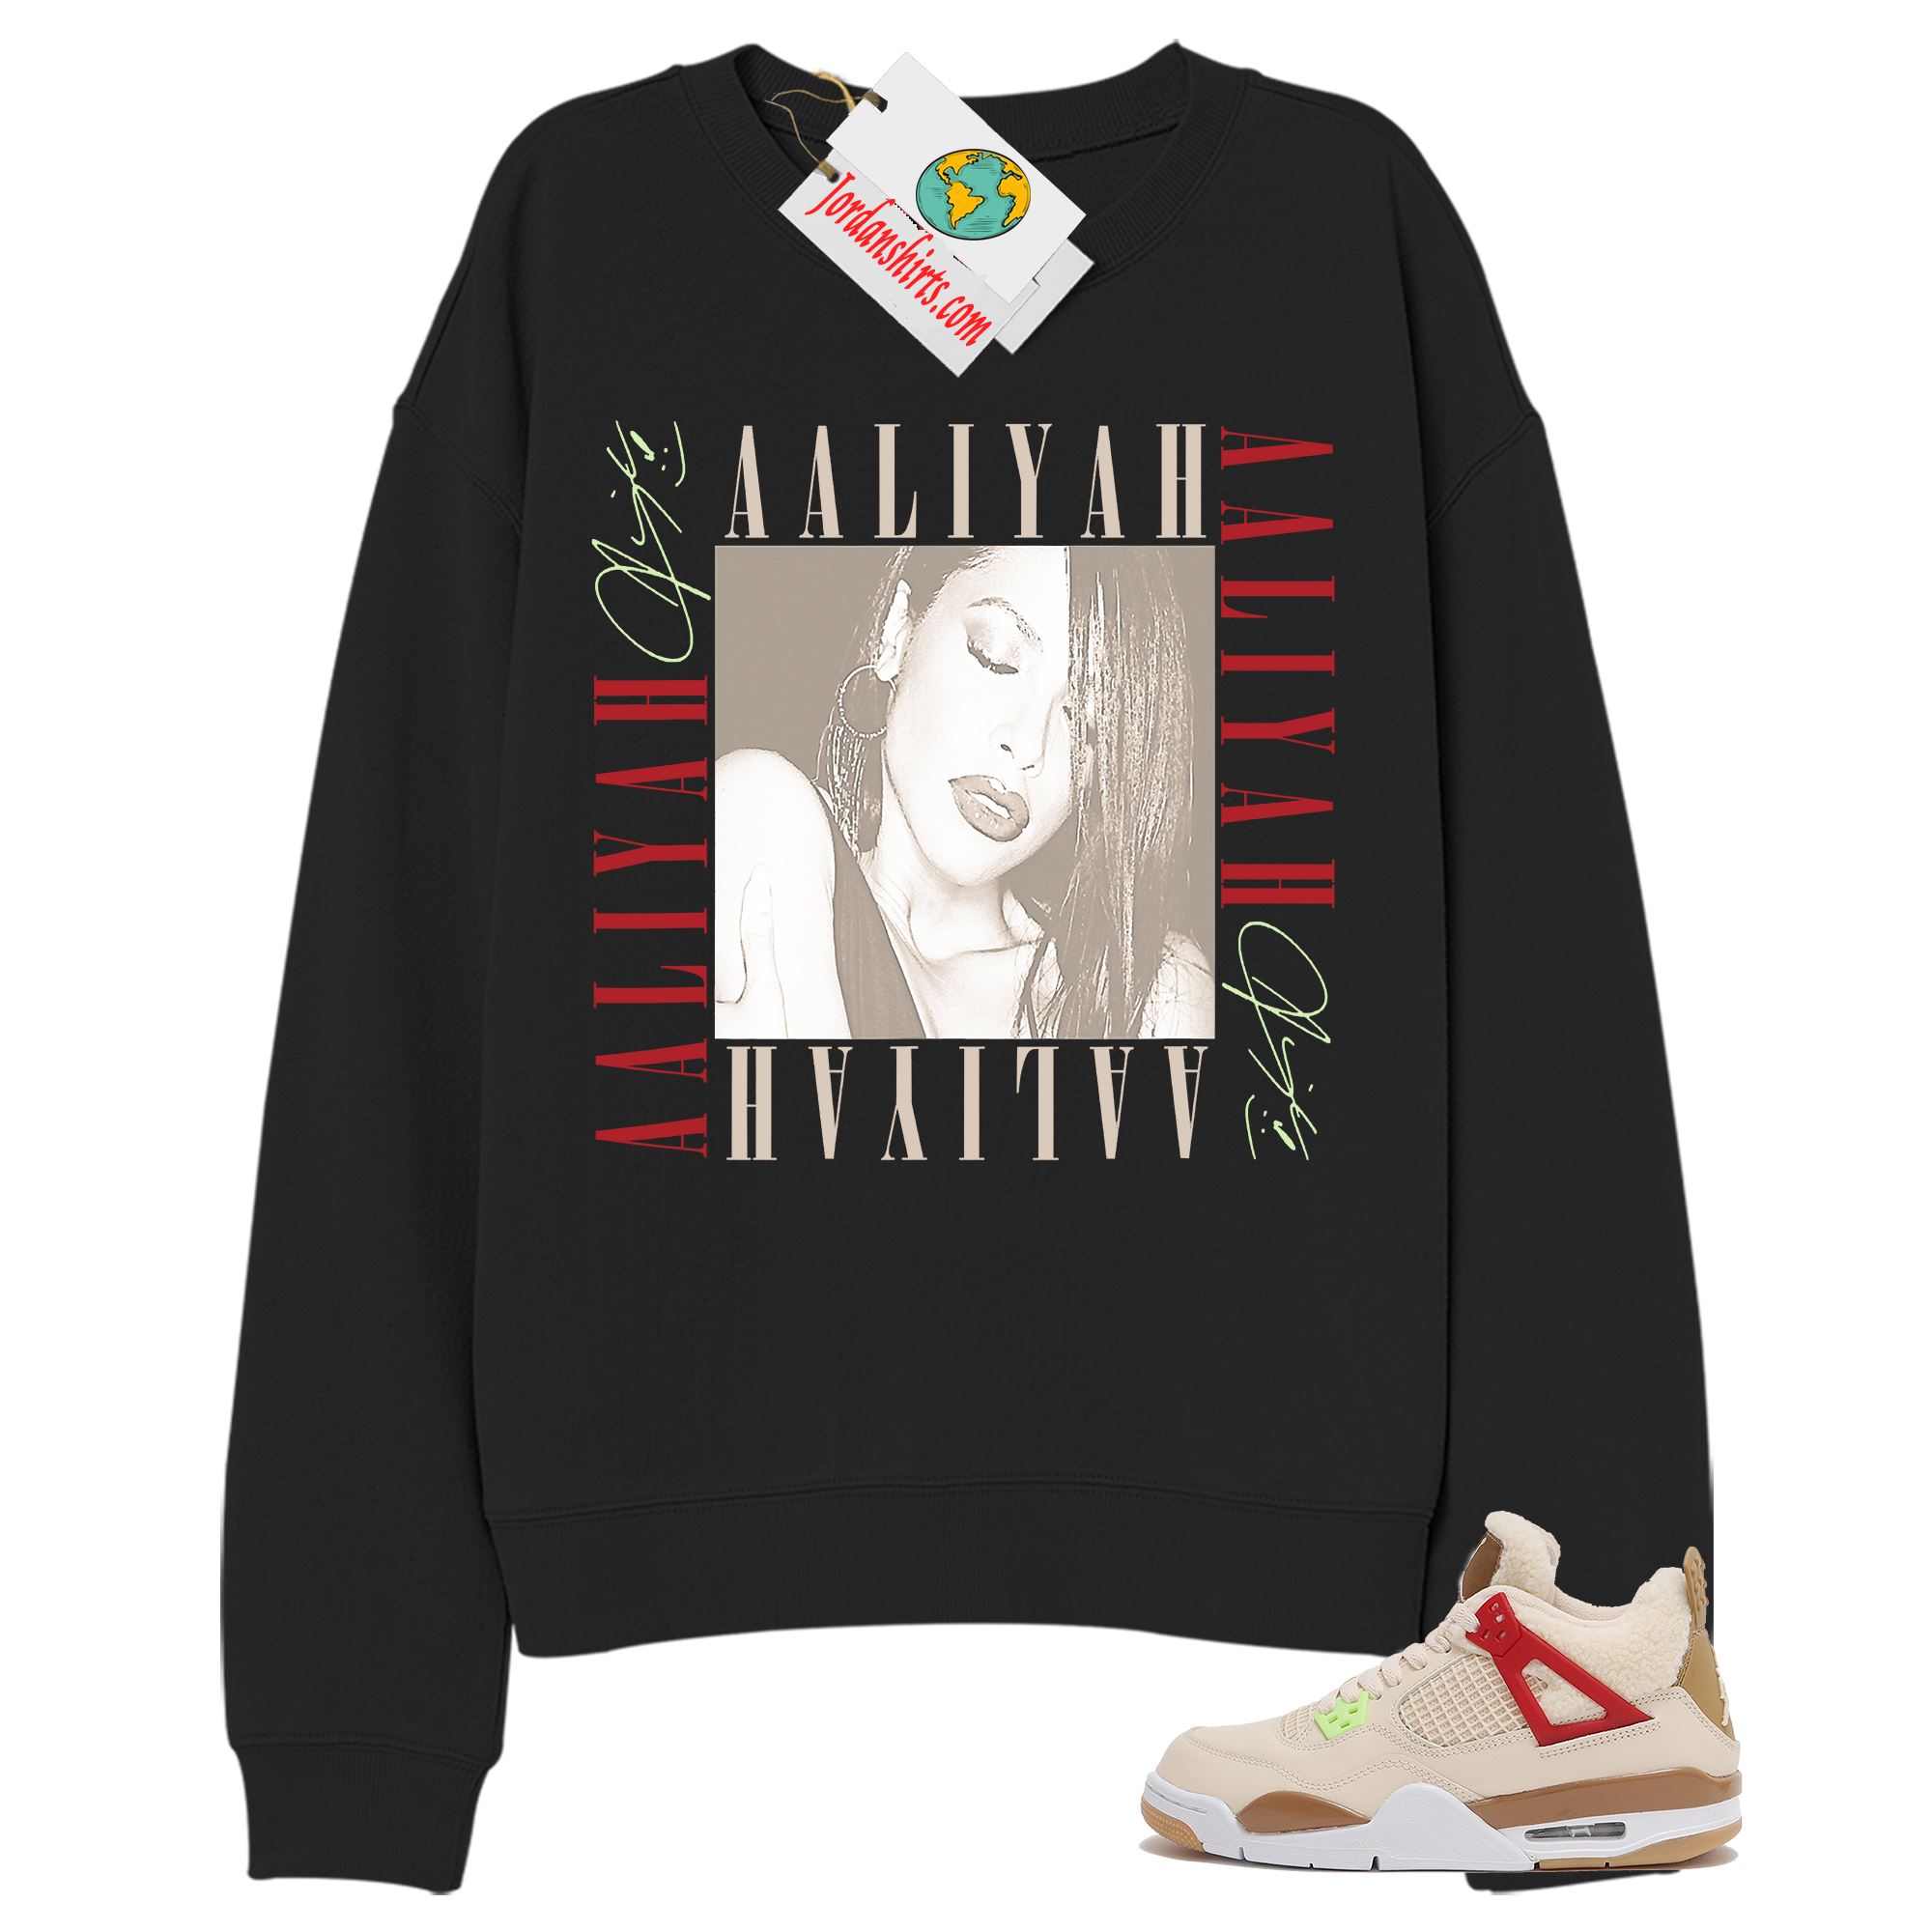 Jordan 4 Sweatshirt, Aaliyah Box Black Sweatshirt Air Jordan 4 Wild Things 4s Size Up To 5xl